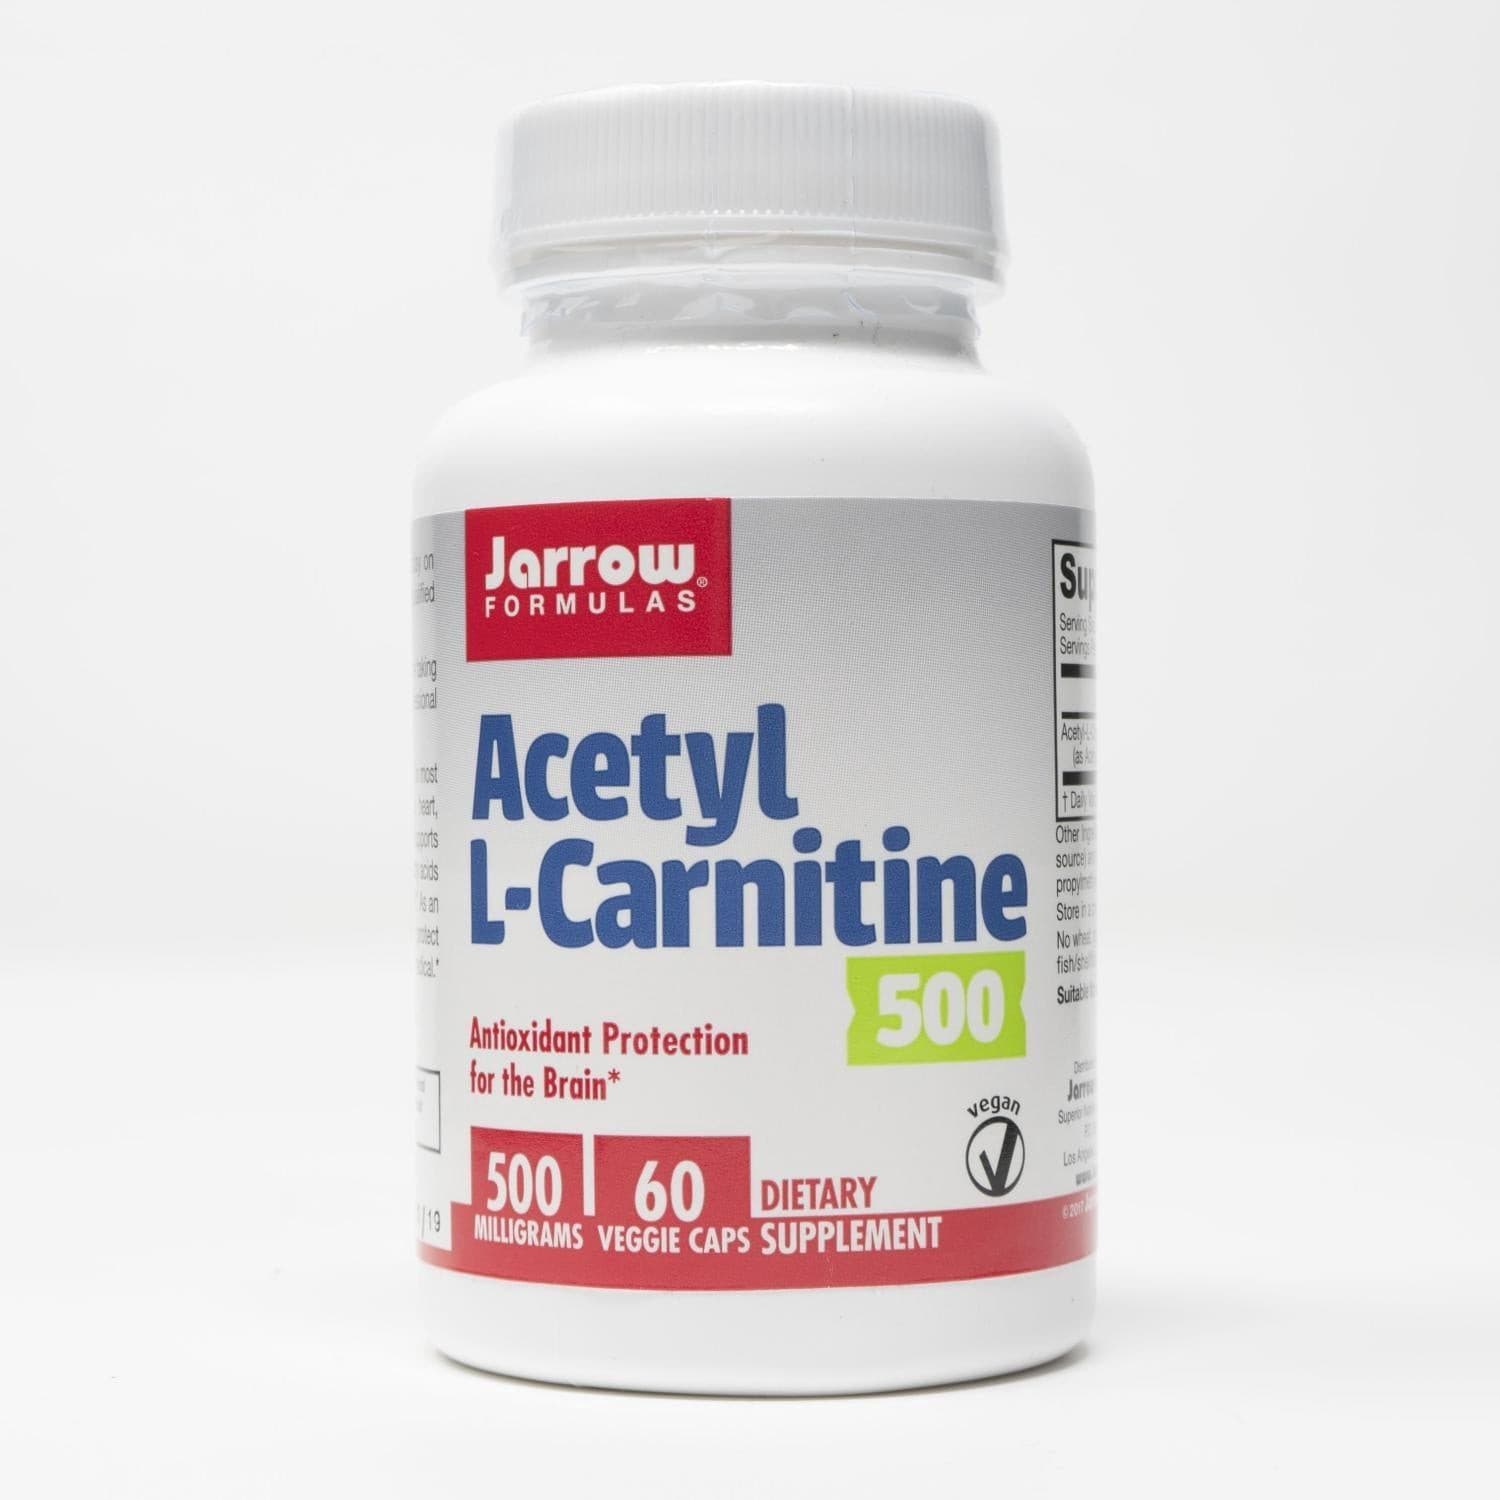 Acetyl L-Carnitine 500mg.